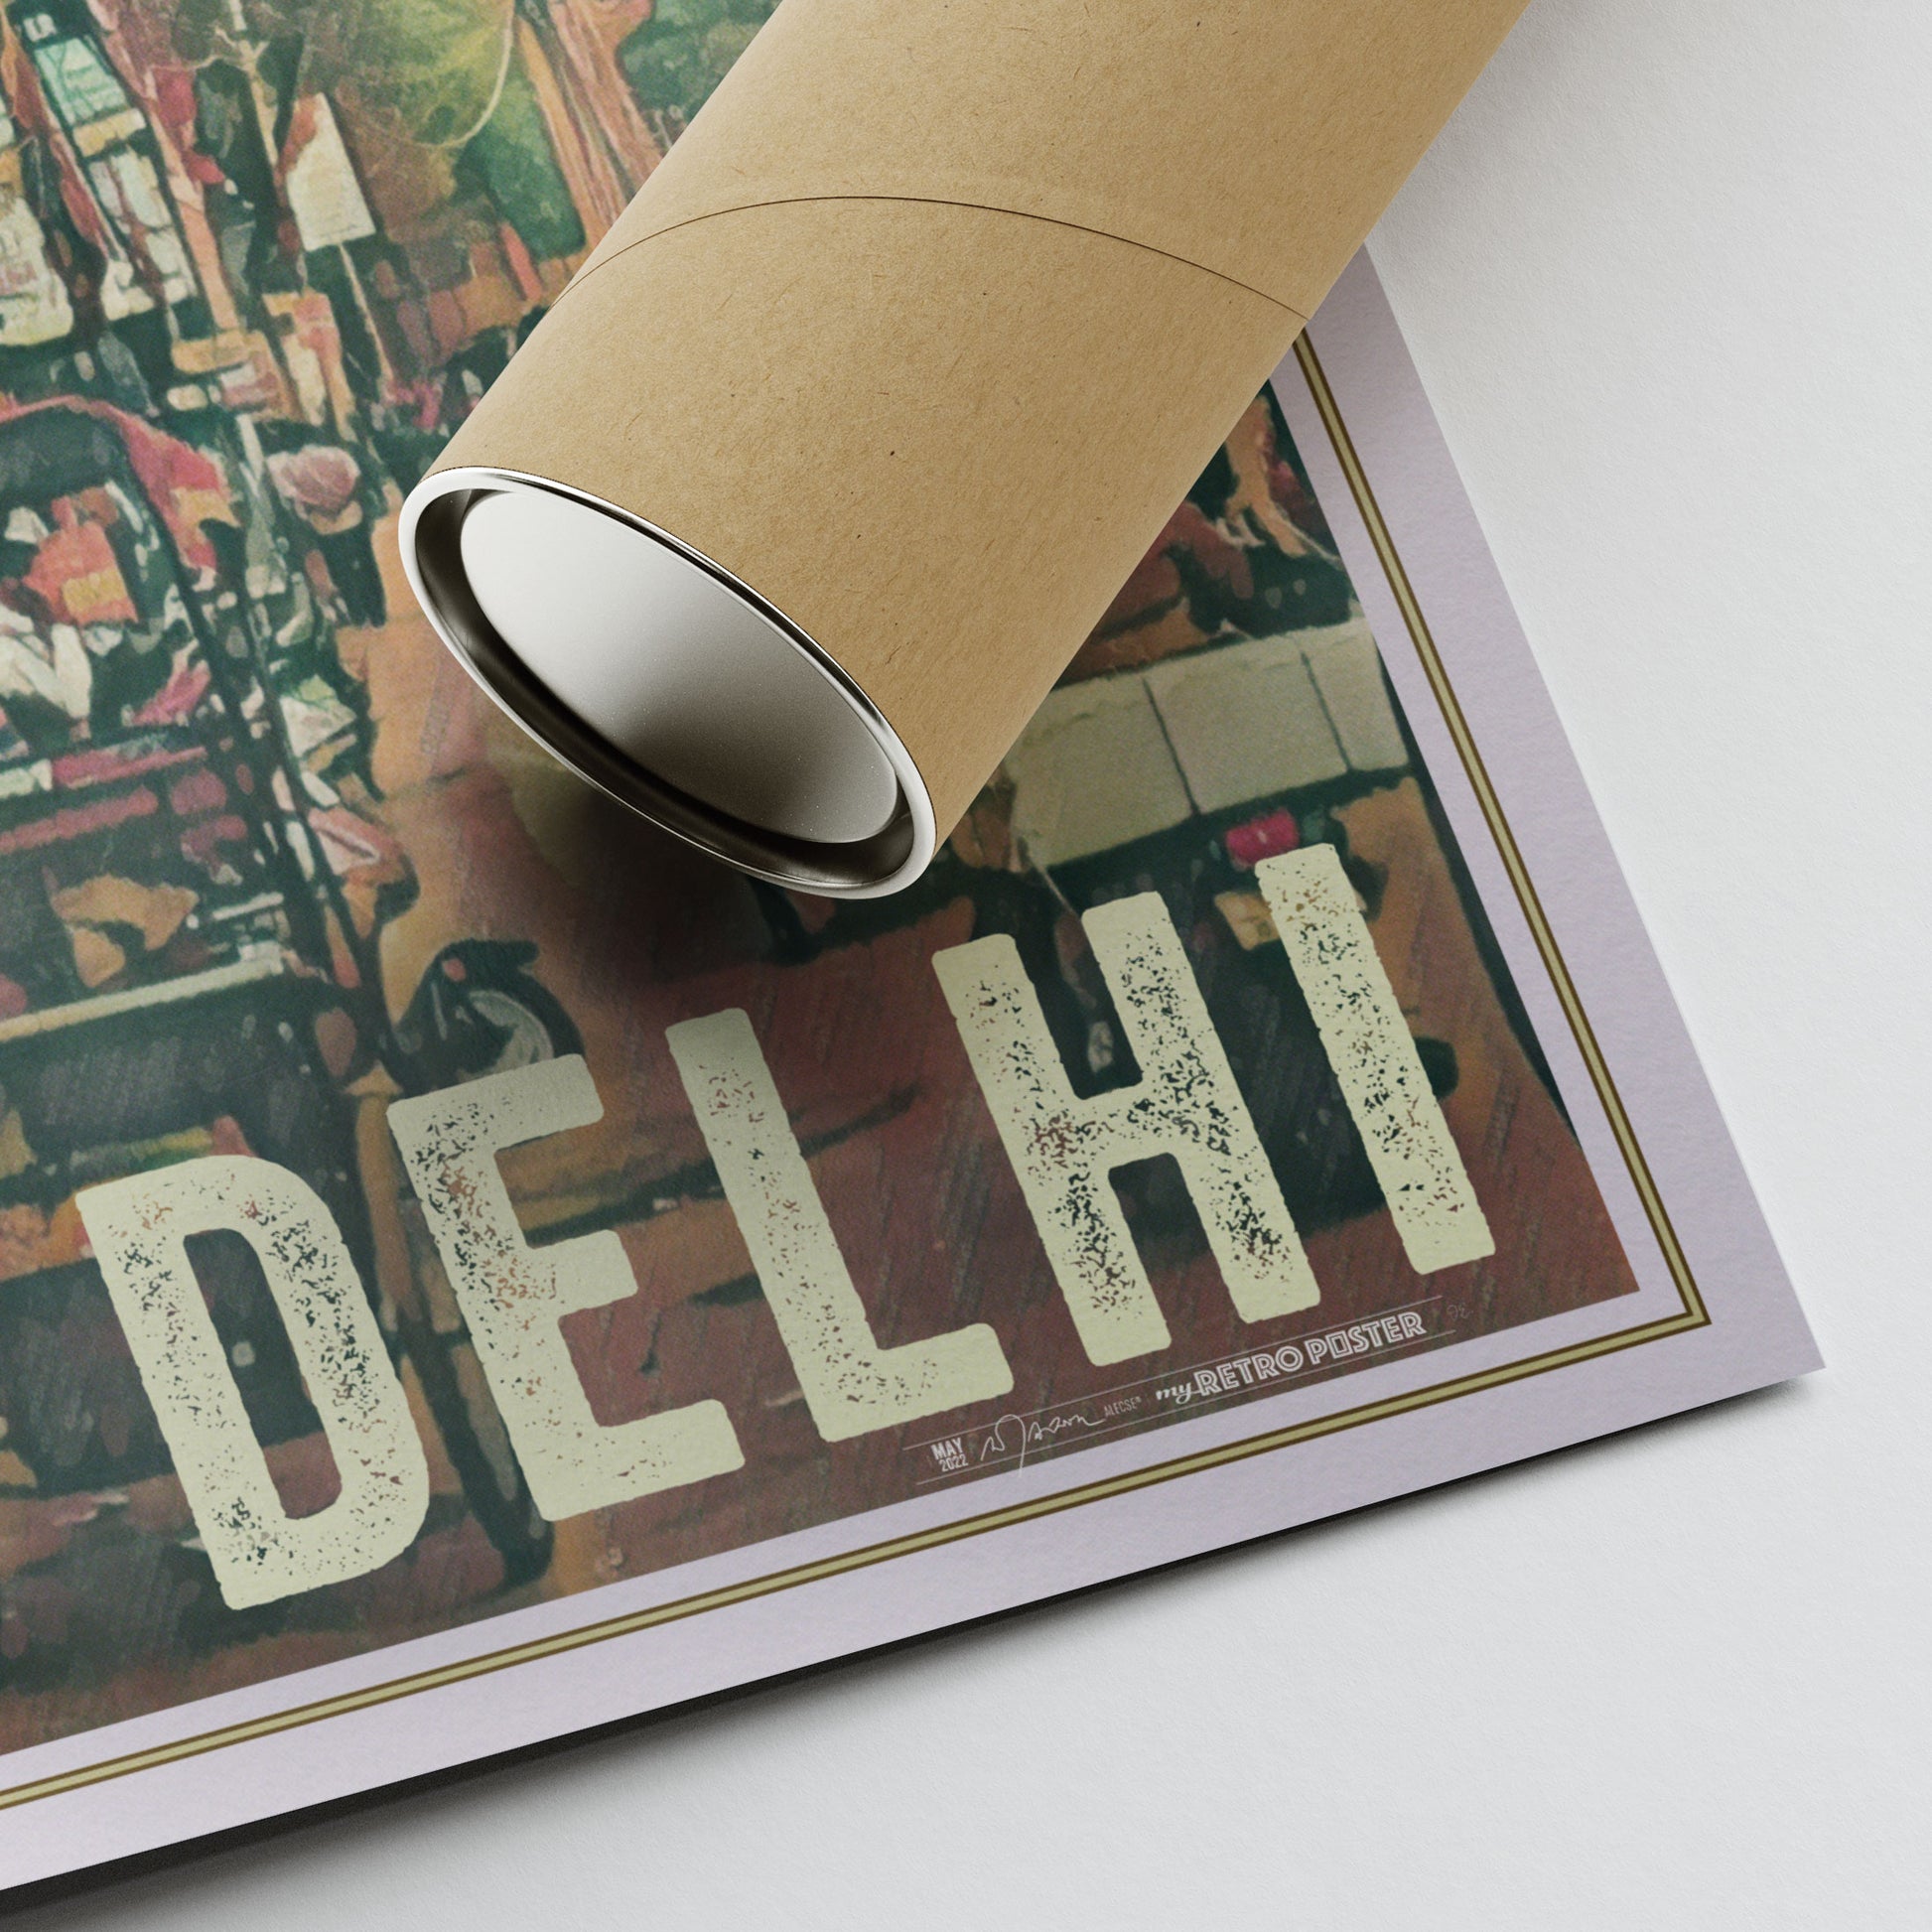 Corner of the Old Delhi poster